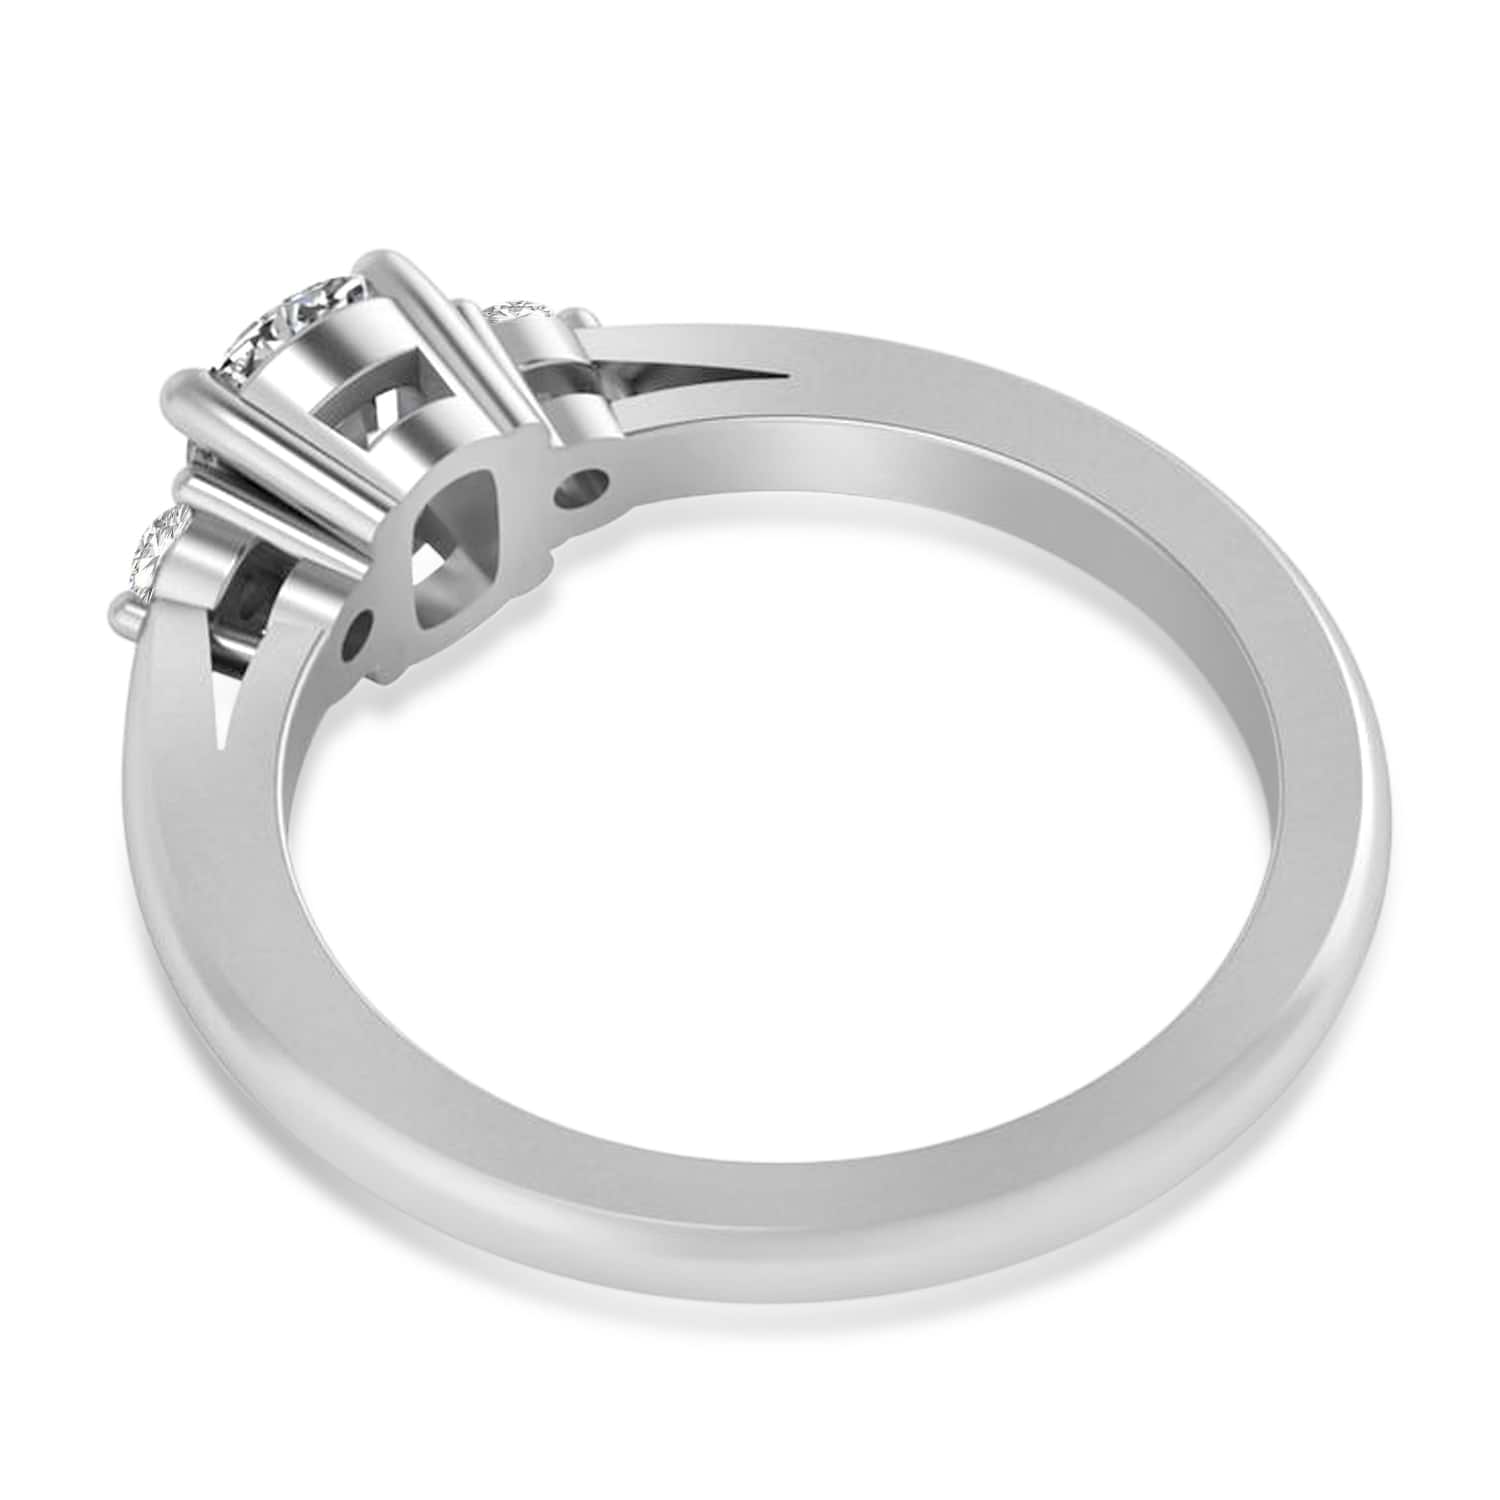 Cushion Lab Grown Diamond Three-Stone Engagement Ring 14k White Gold (1.14ct)